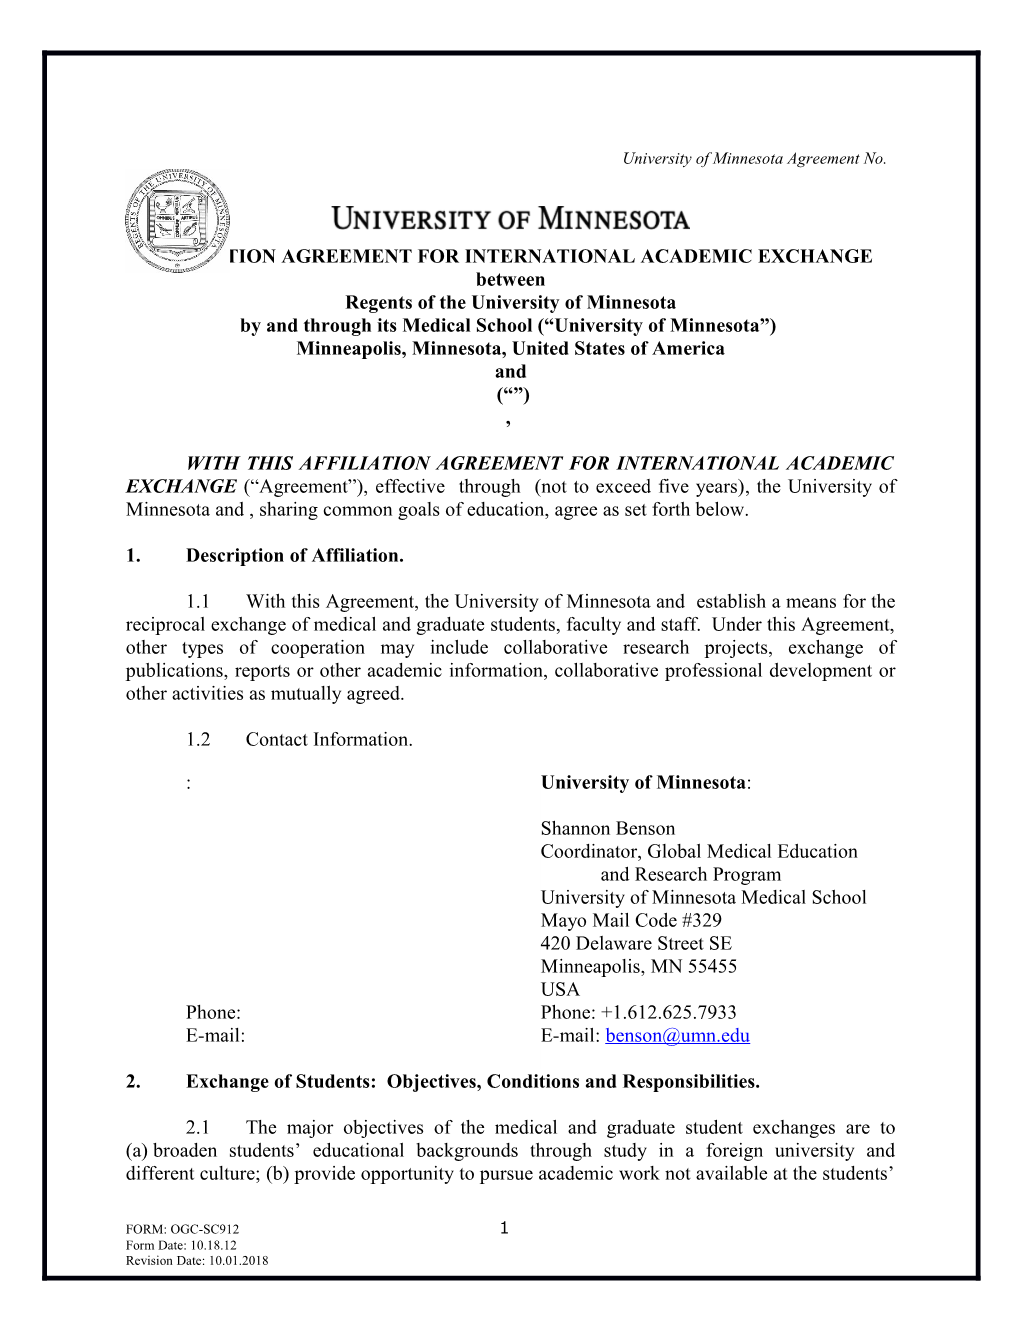 Affiliation Agreement Forinternational Academic Exchange